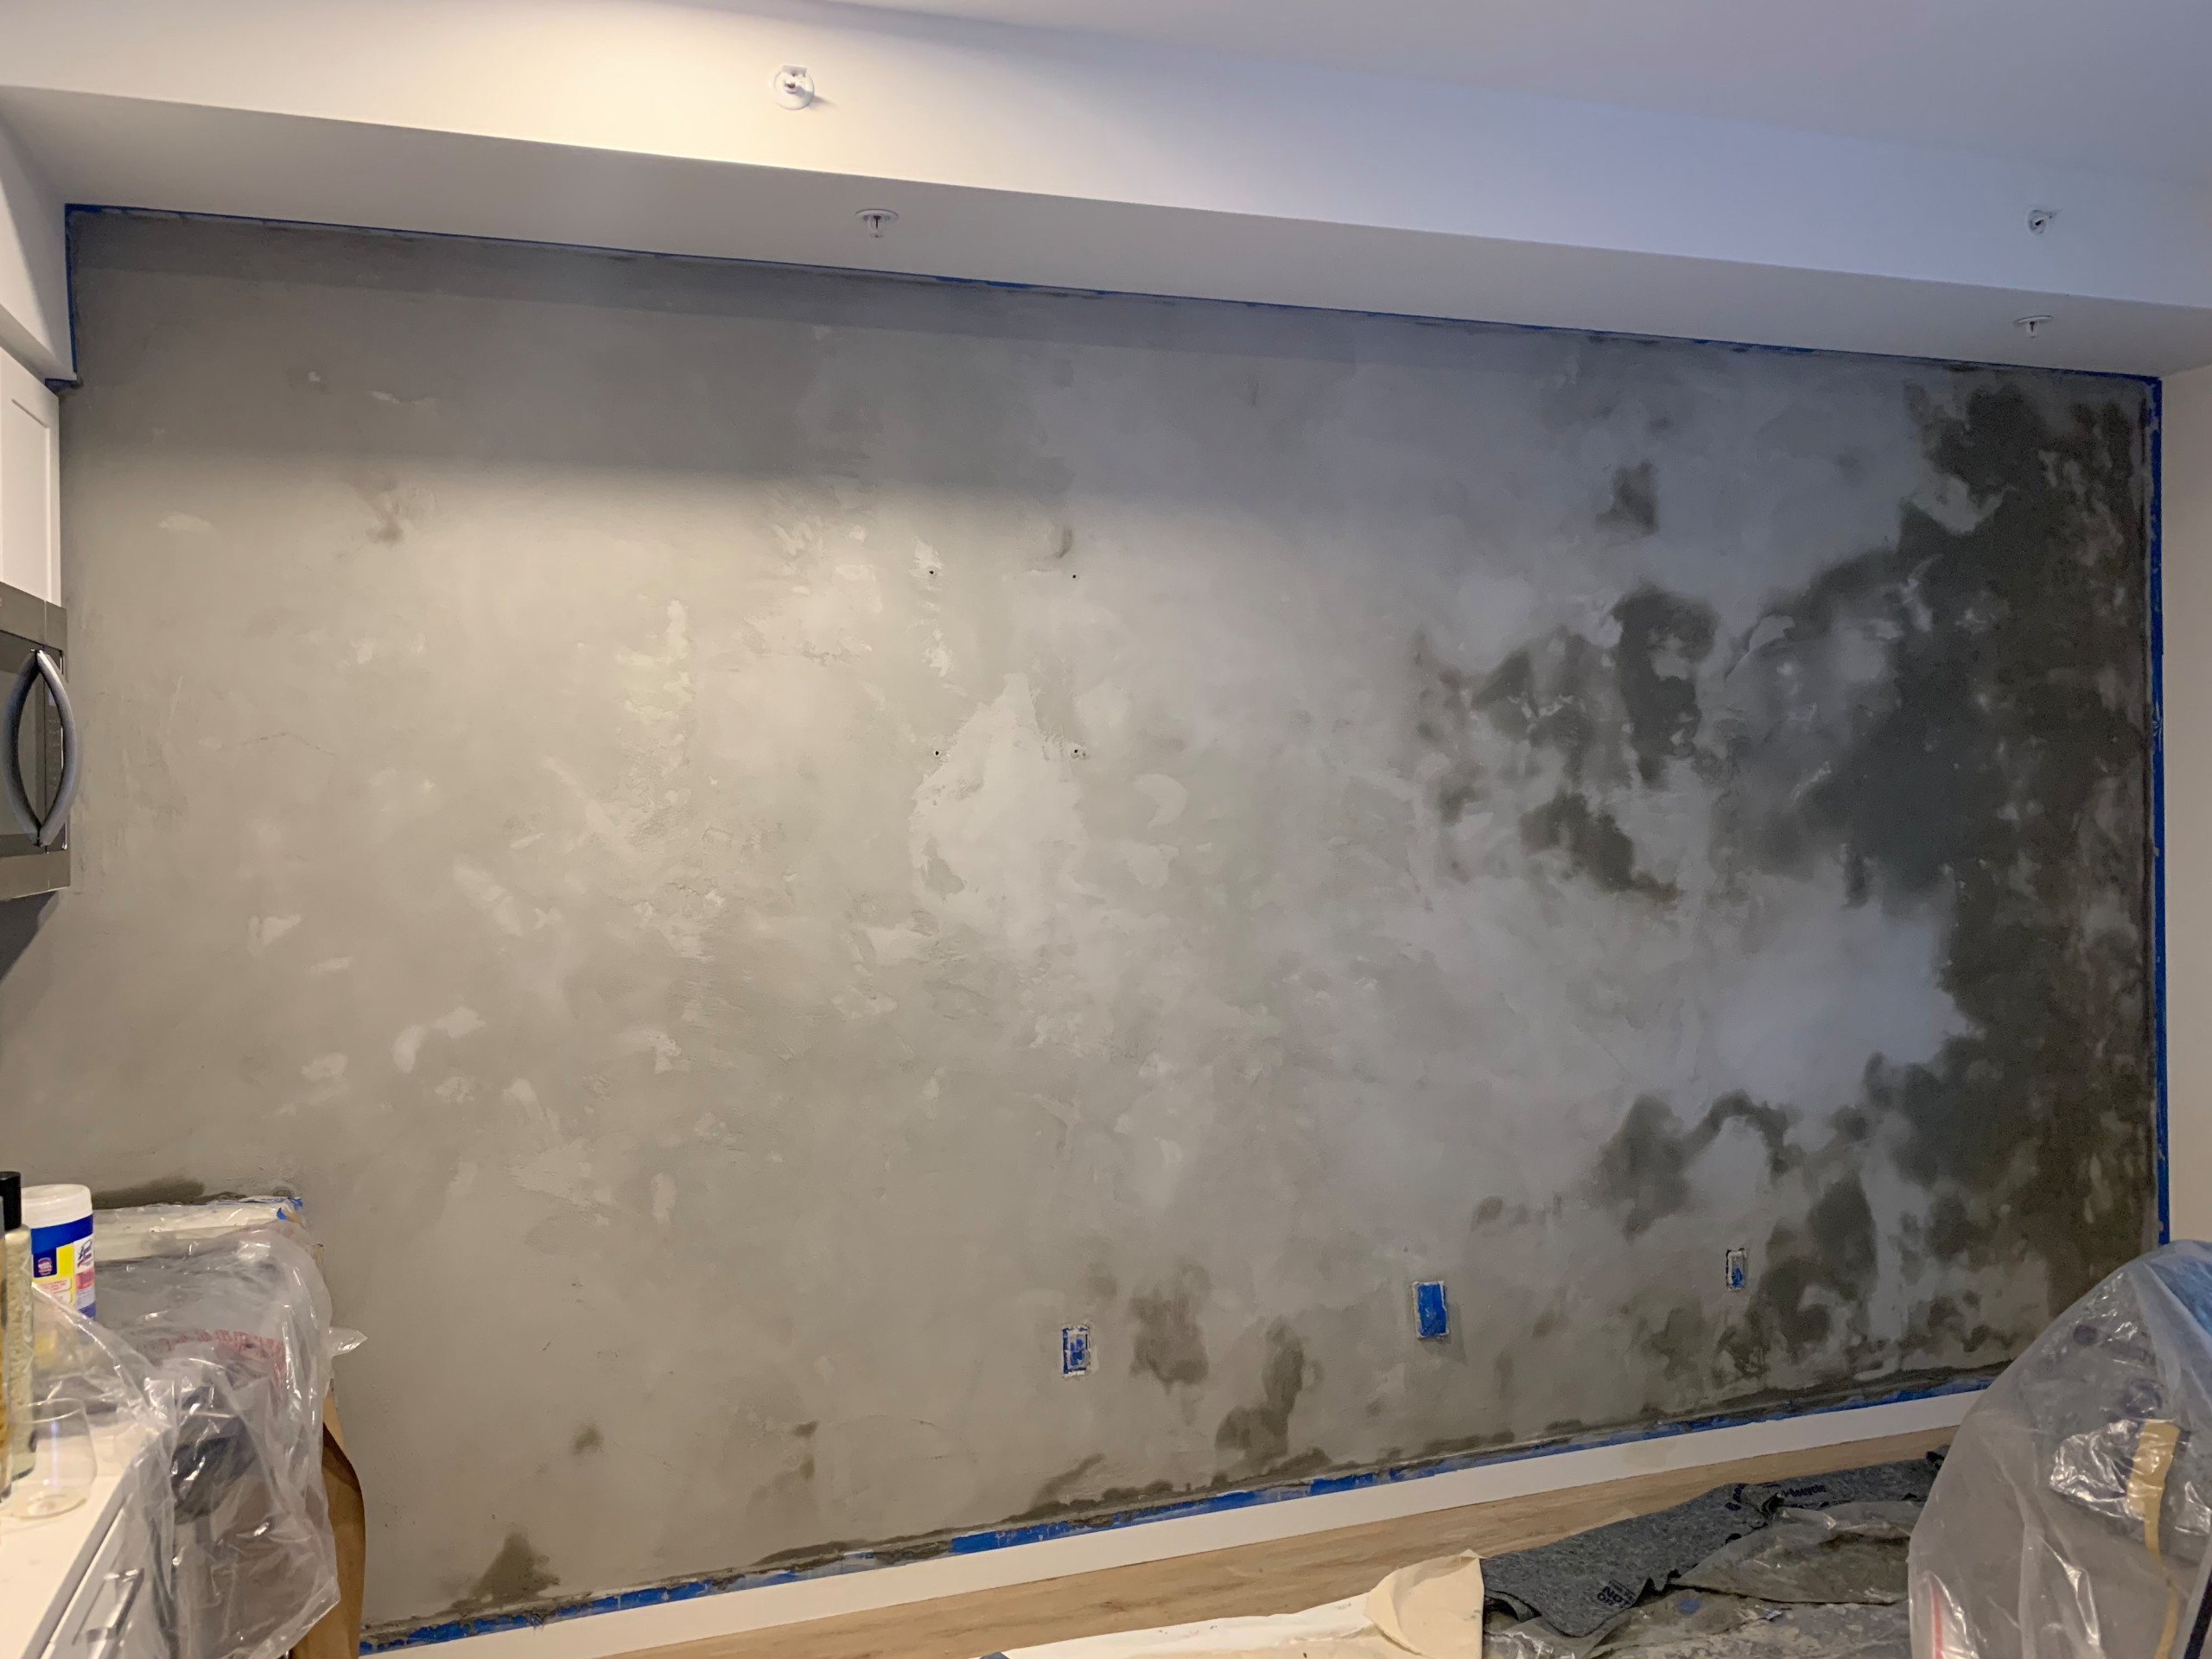 Concrete Plaster Wall Finish